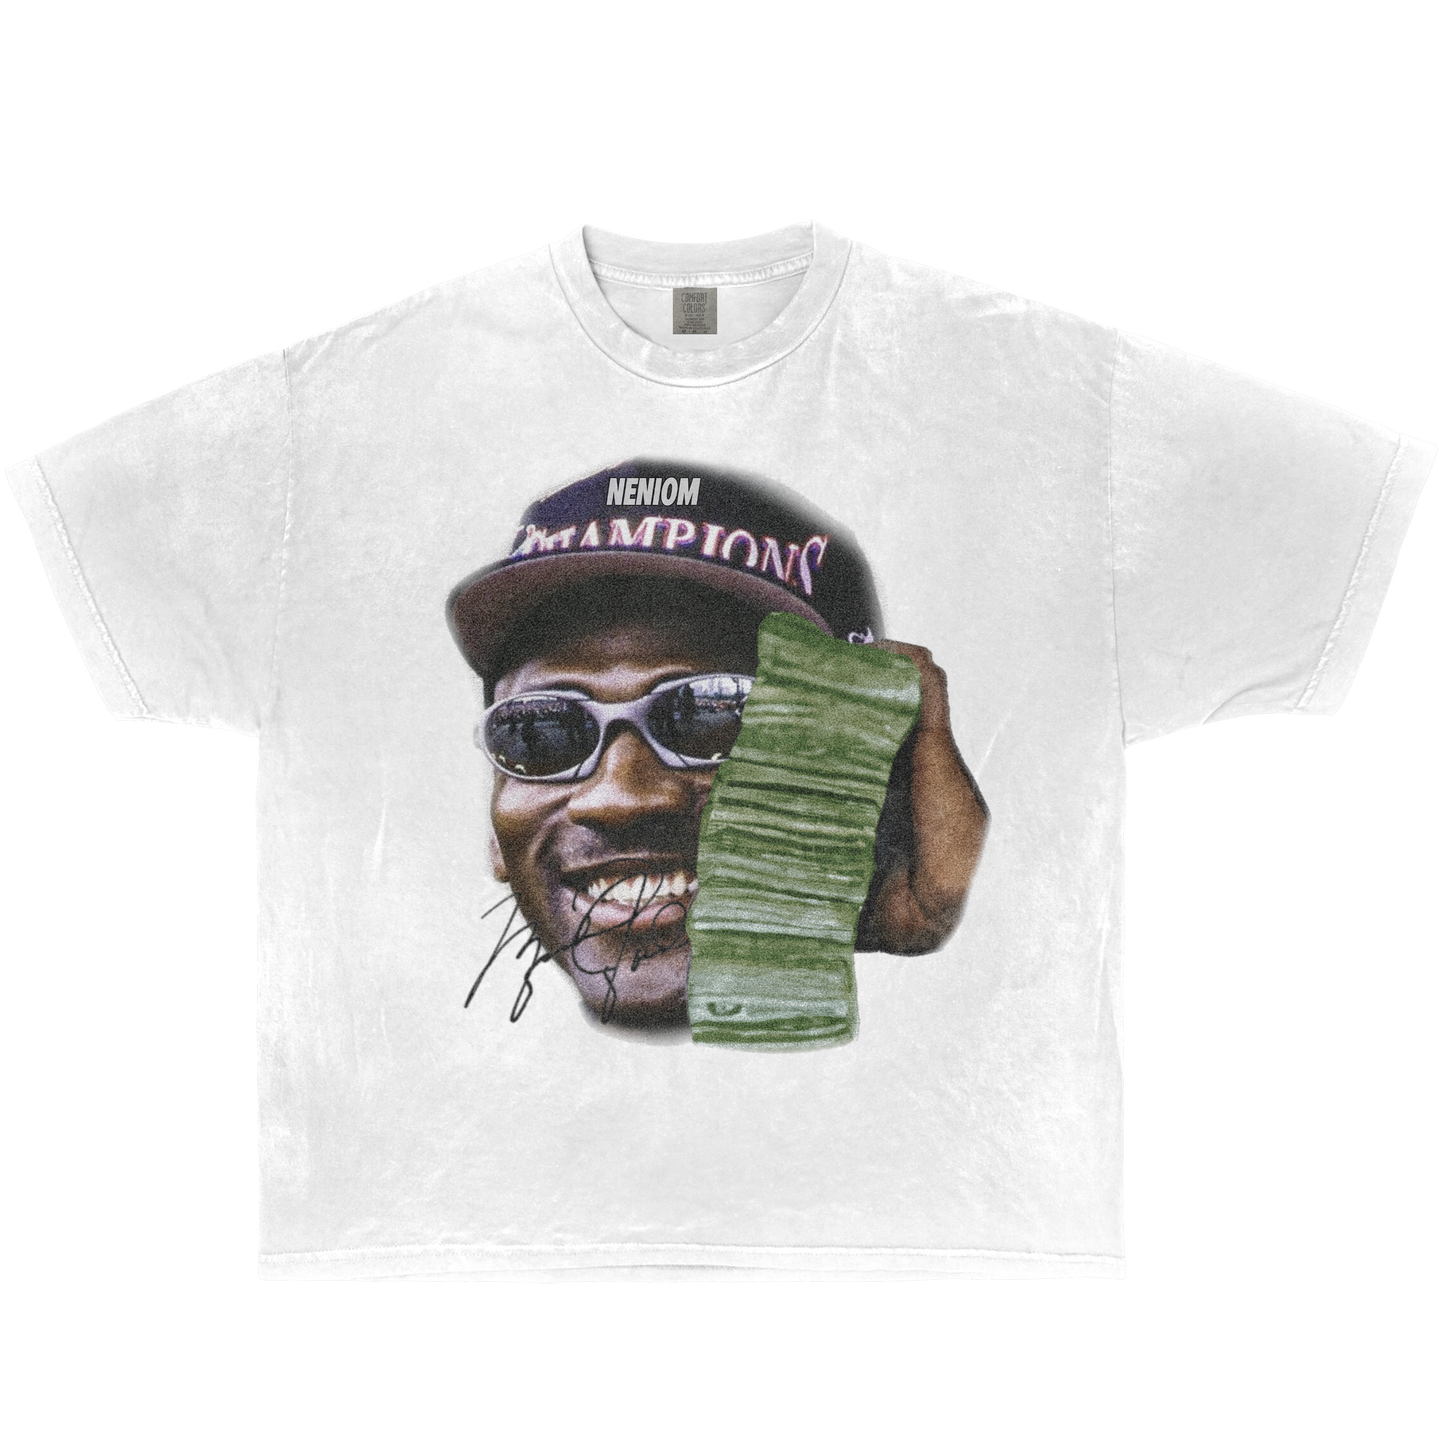 Michael Jordan Money Talk Garment Boxy T-shirt Streetwear